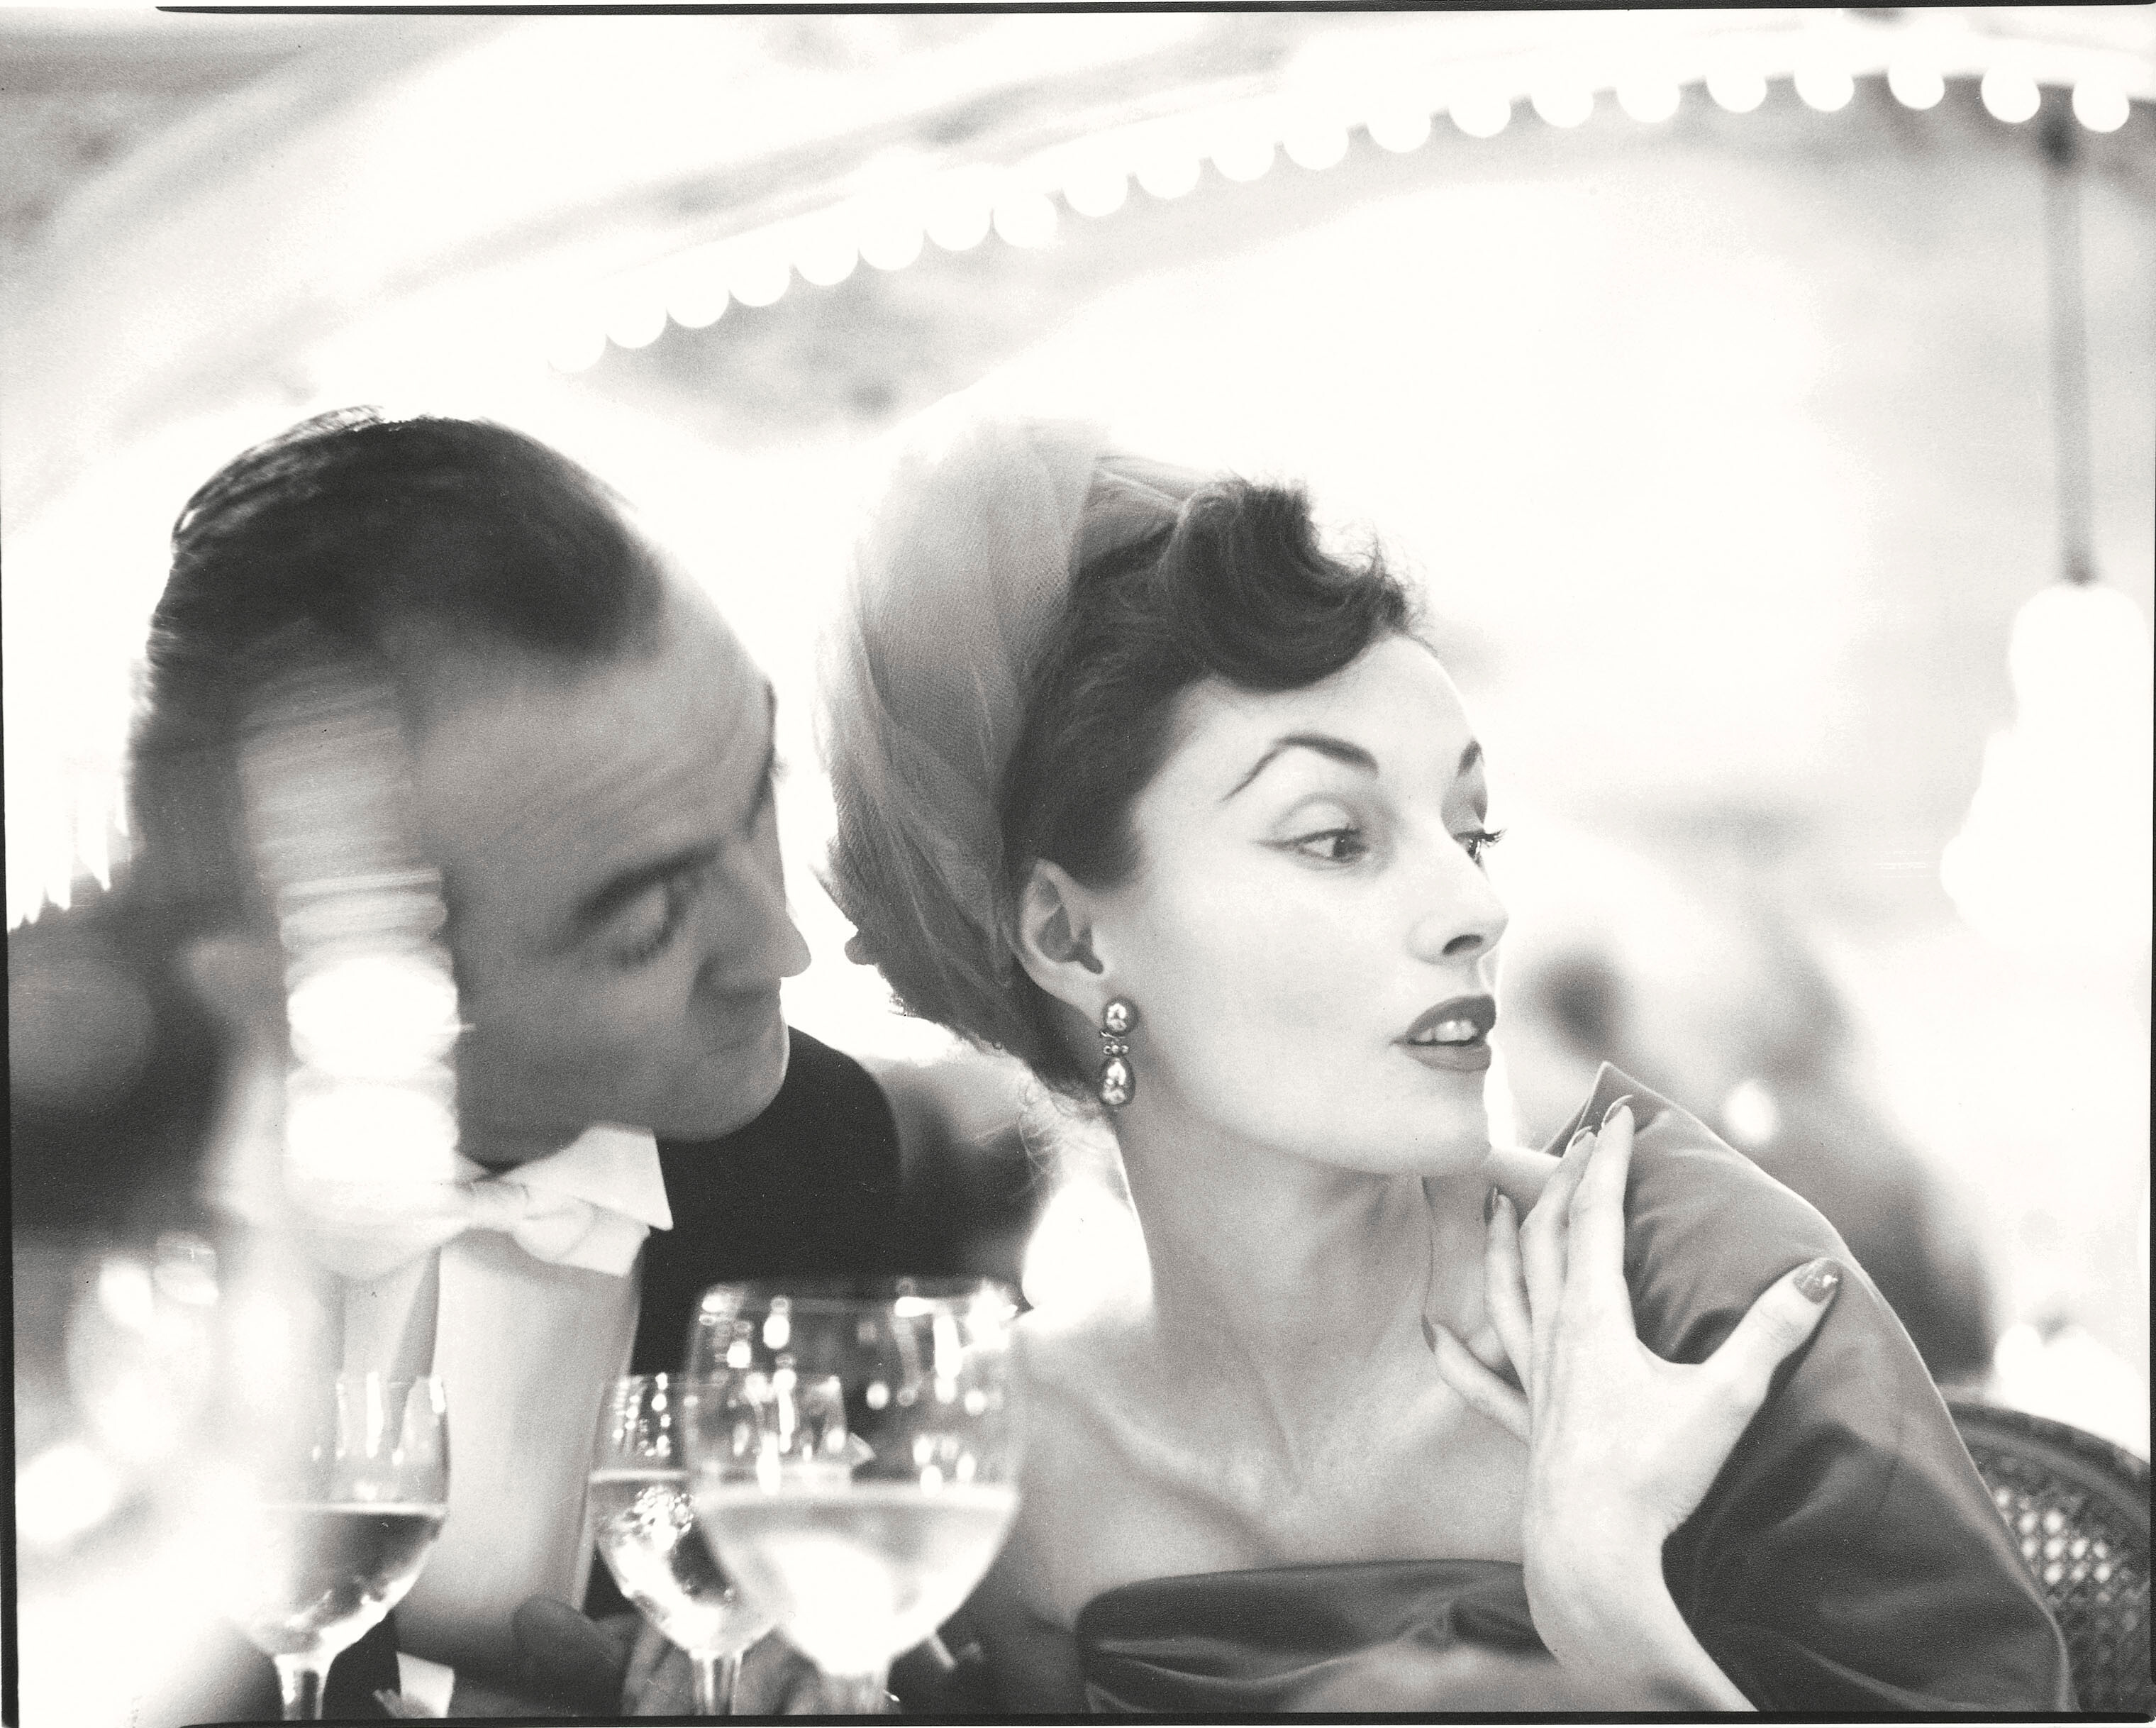 Элиза Дэниелс, Тюрбан Полетт, Пре-Кателан, Париж, август 1948.  Фотограф Ричард Аведон